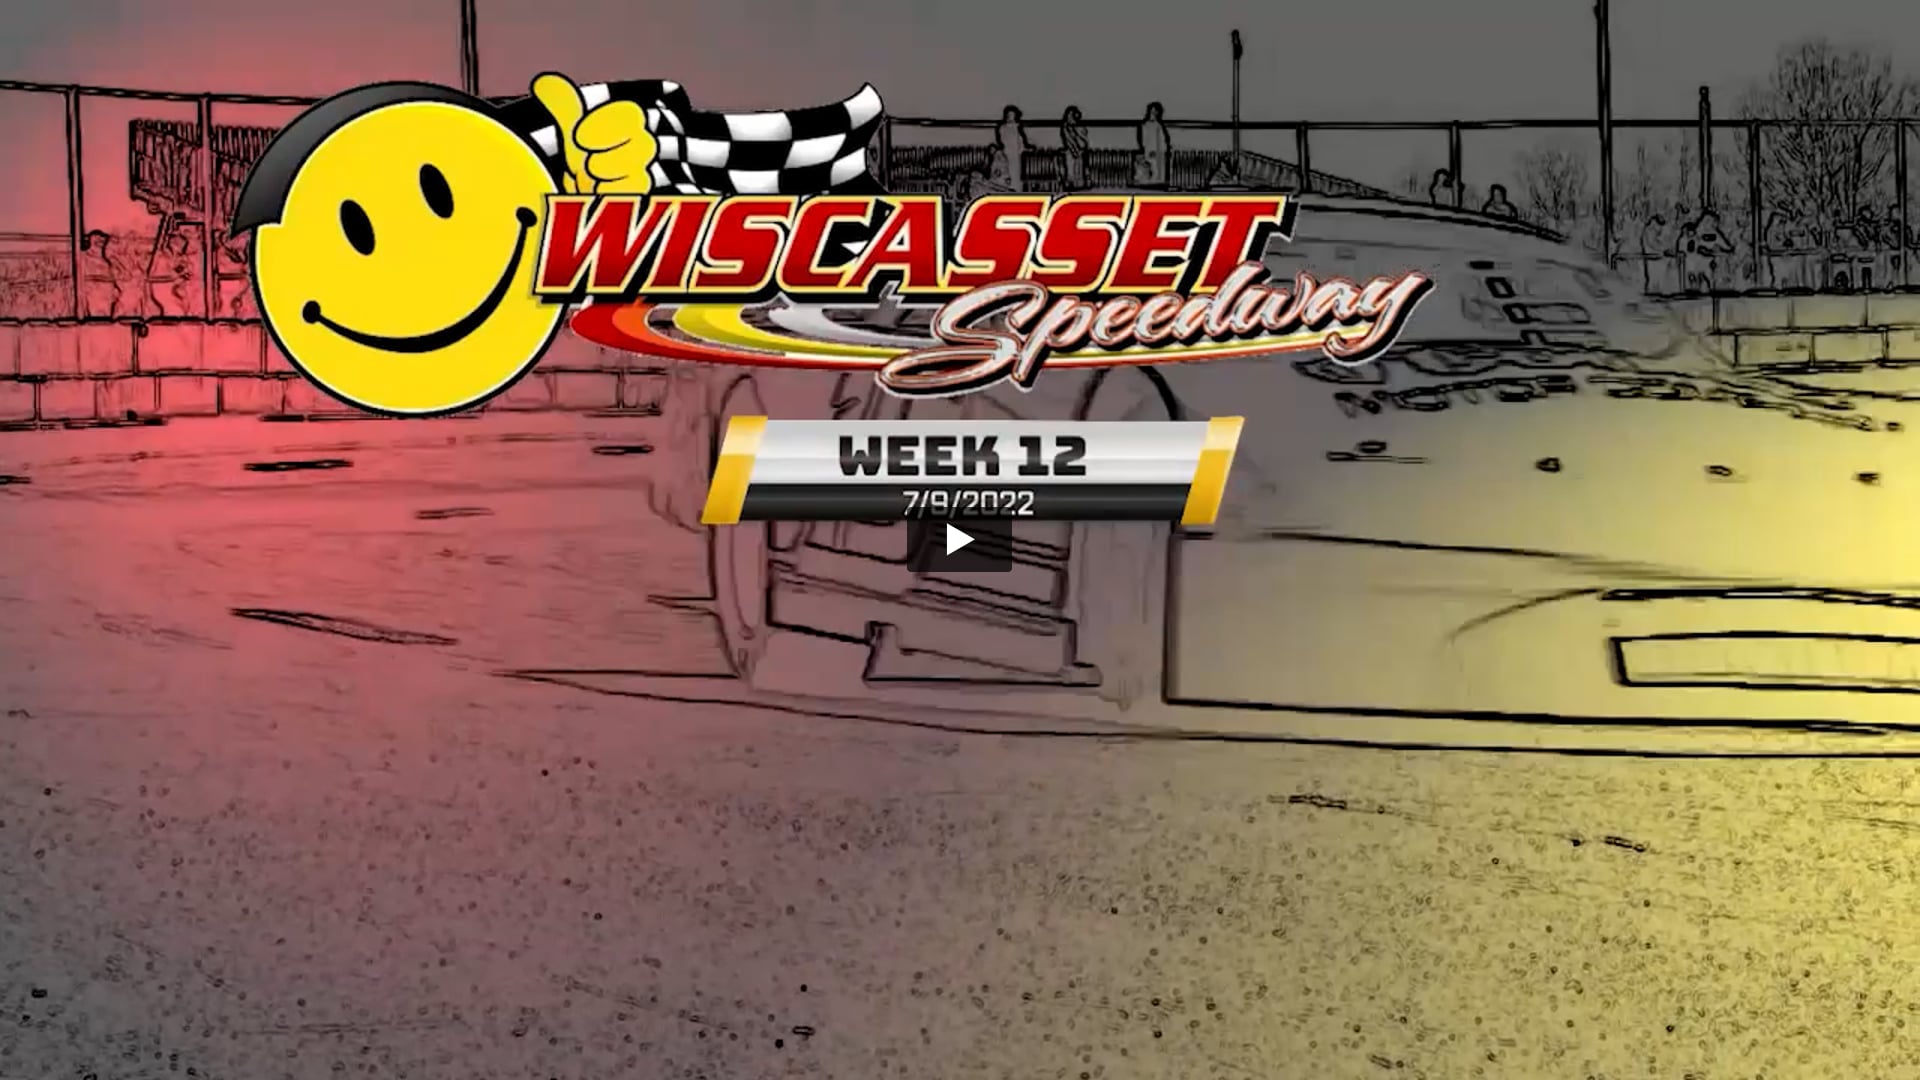 2022 Racing at Wiscasset Speedway: Week 12